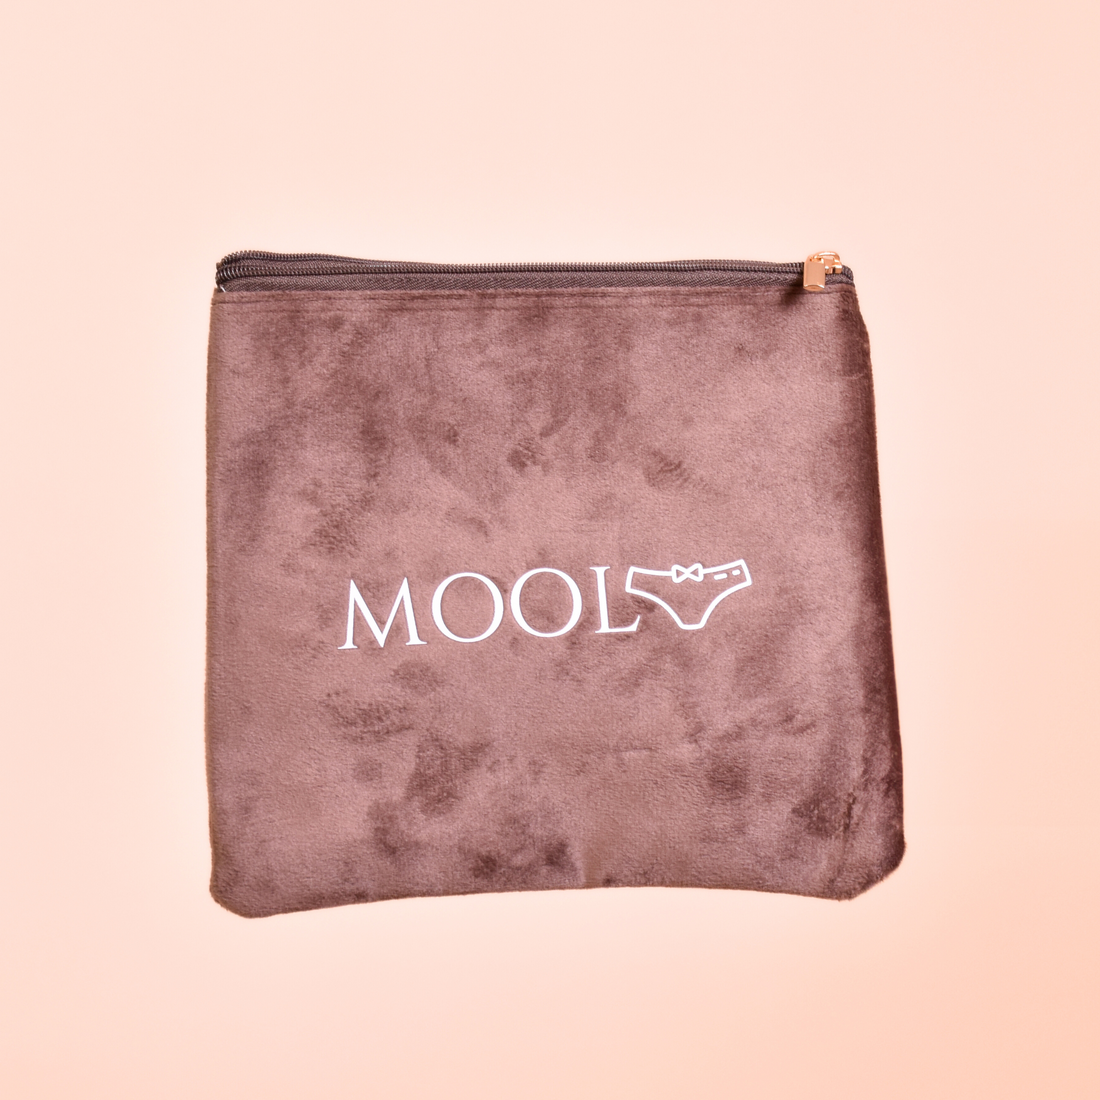 Mool Bag - Tasche zum Transport deiner Menstruationsunterhosen.